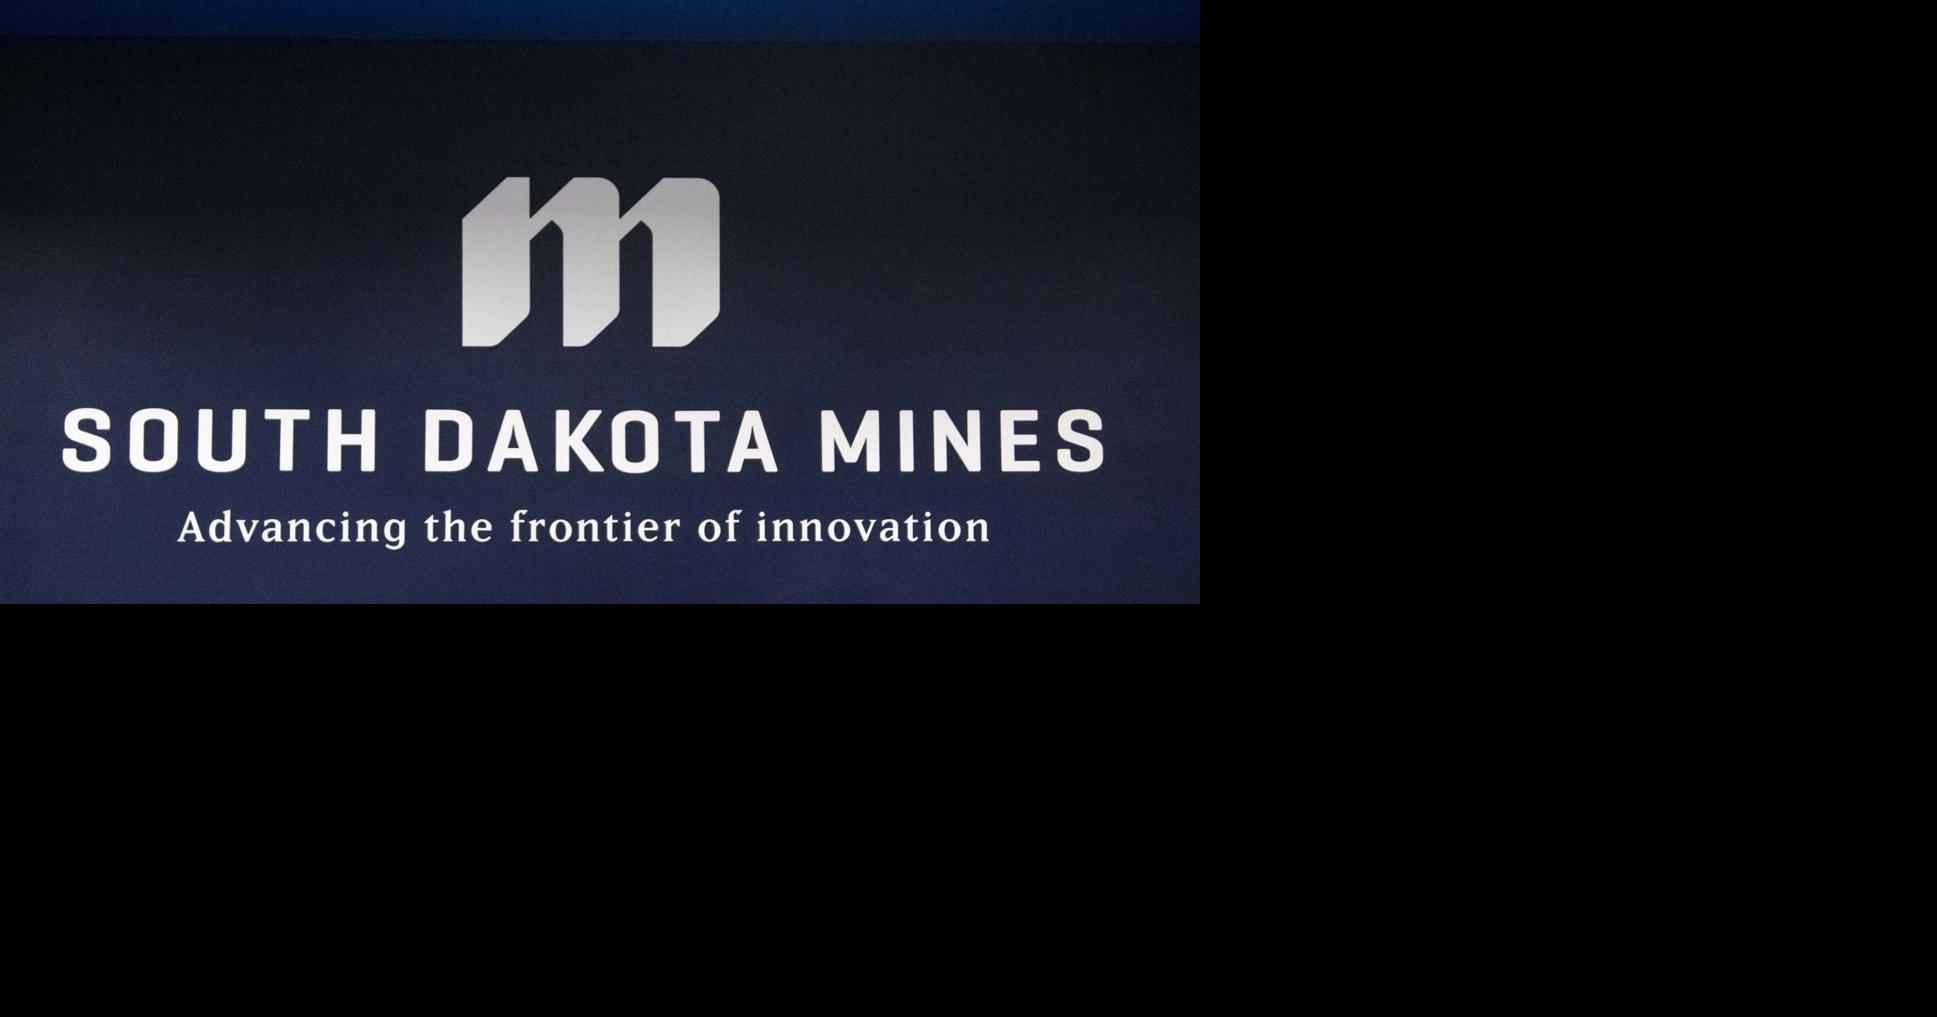 South Dakota Mines earns top rankings